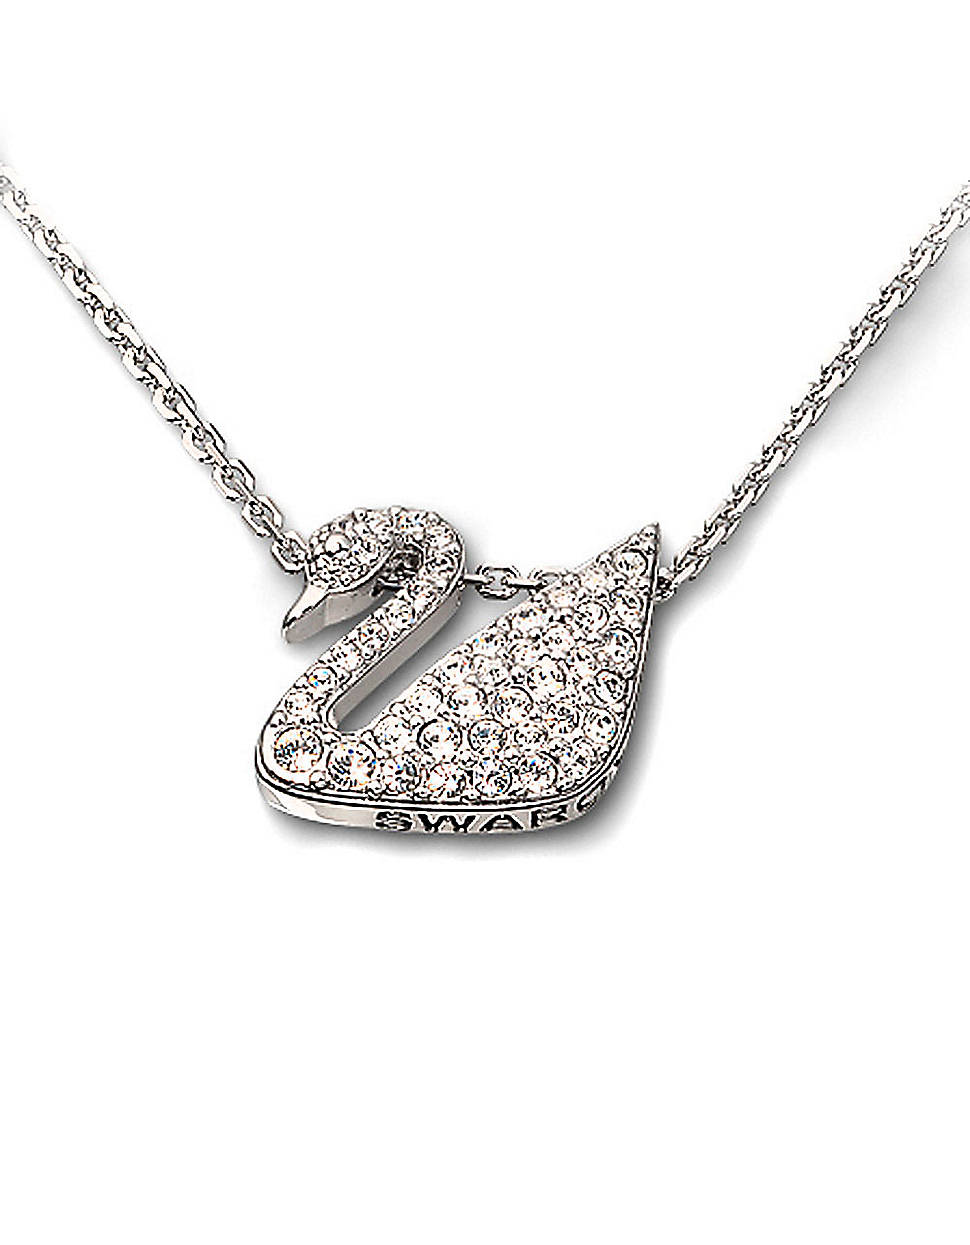 Lyst - Swarovski Crystal Swan Pendant Necklace in Metallic